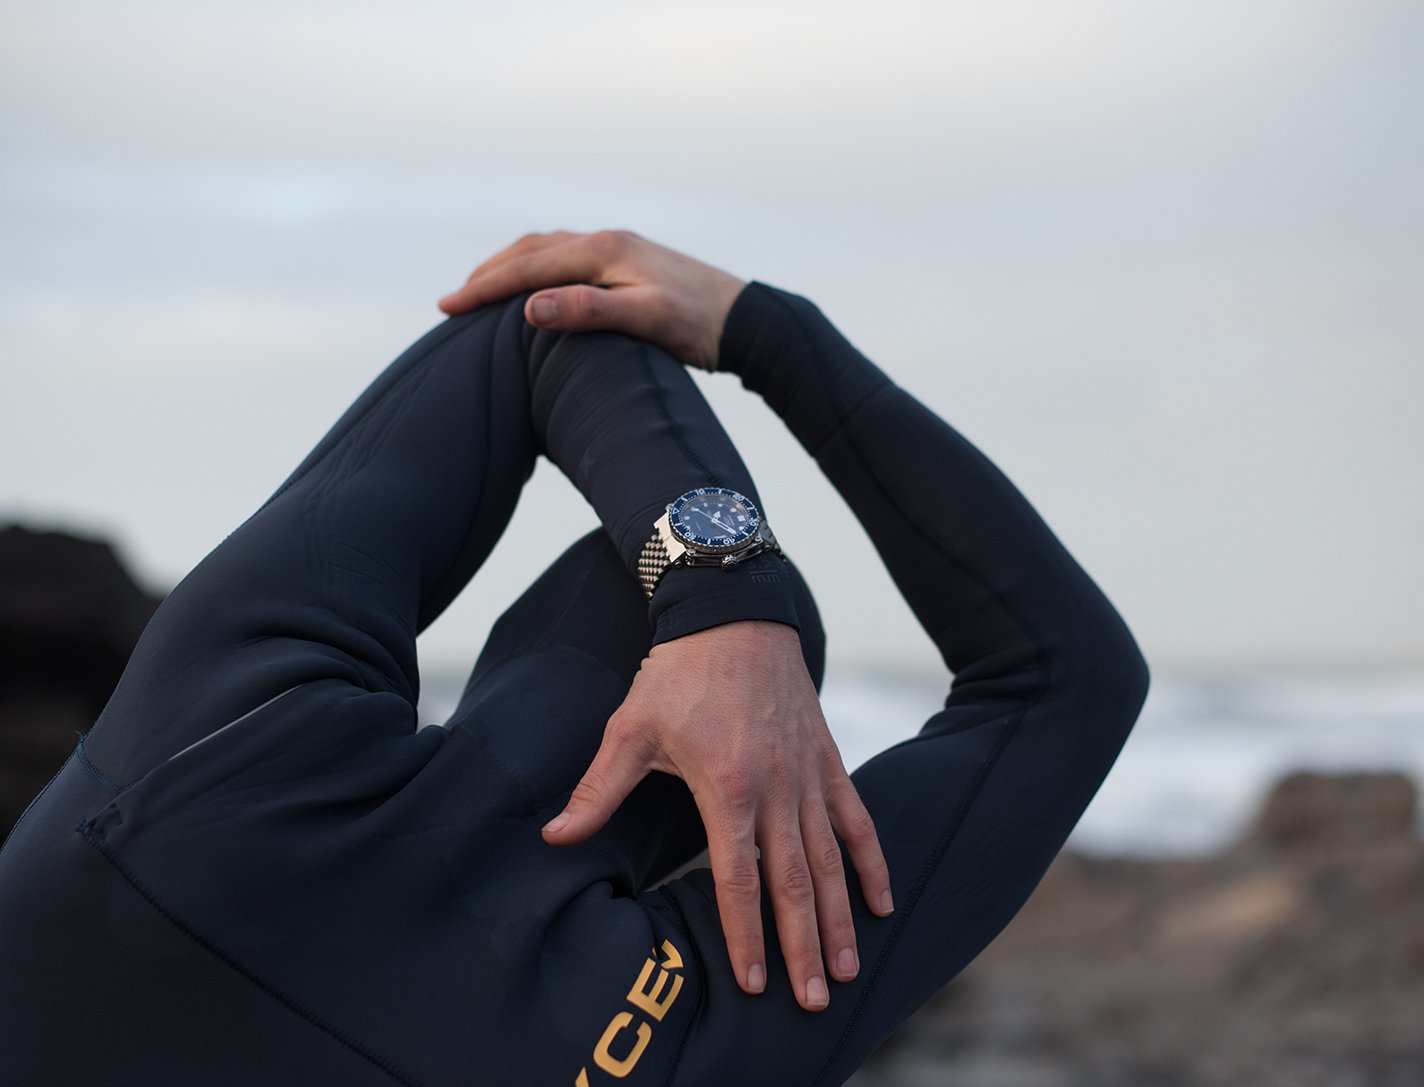 reubyn ash formex ambassador wearing a formex watch while surfing